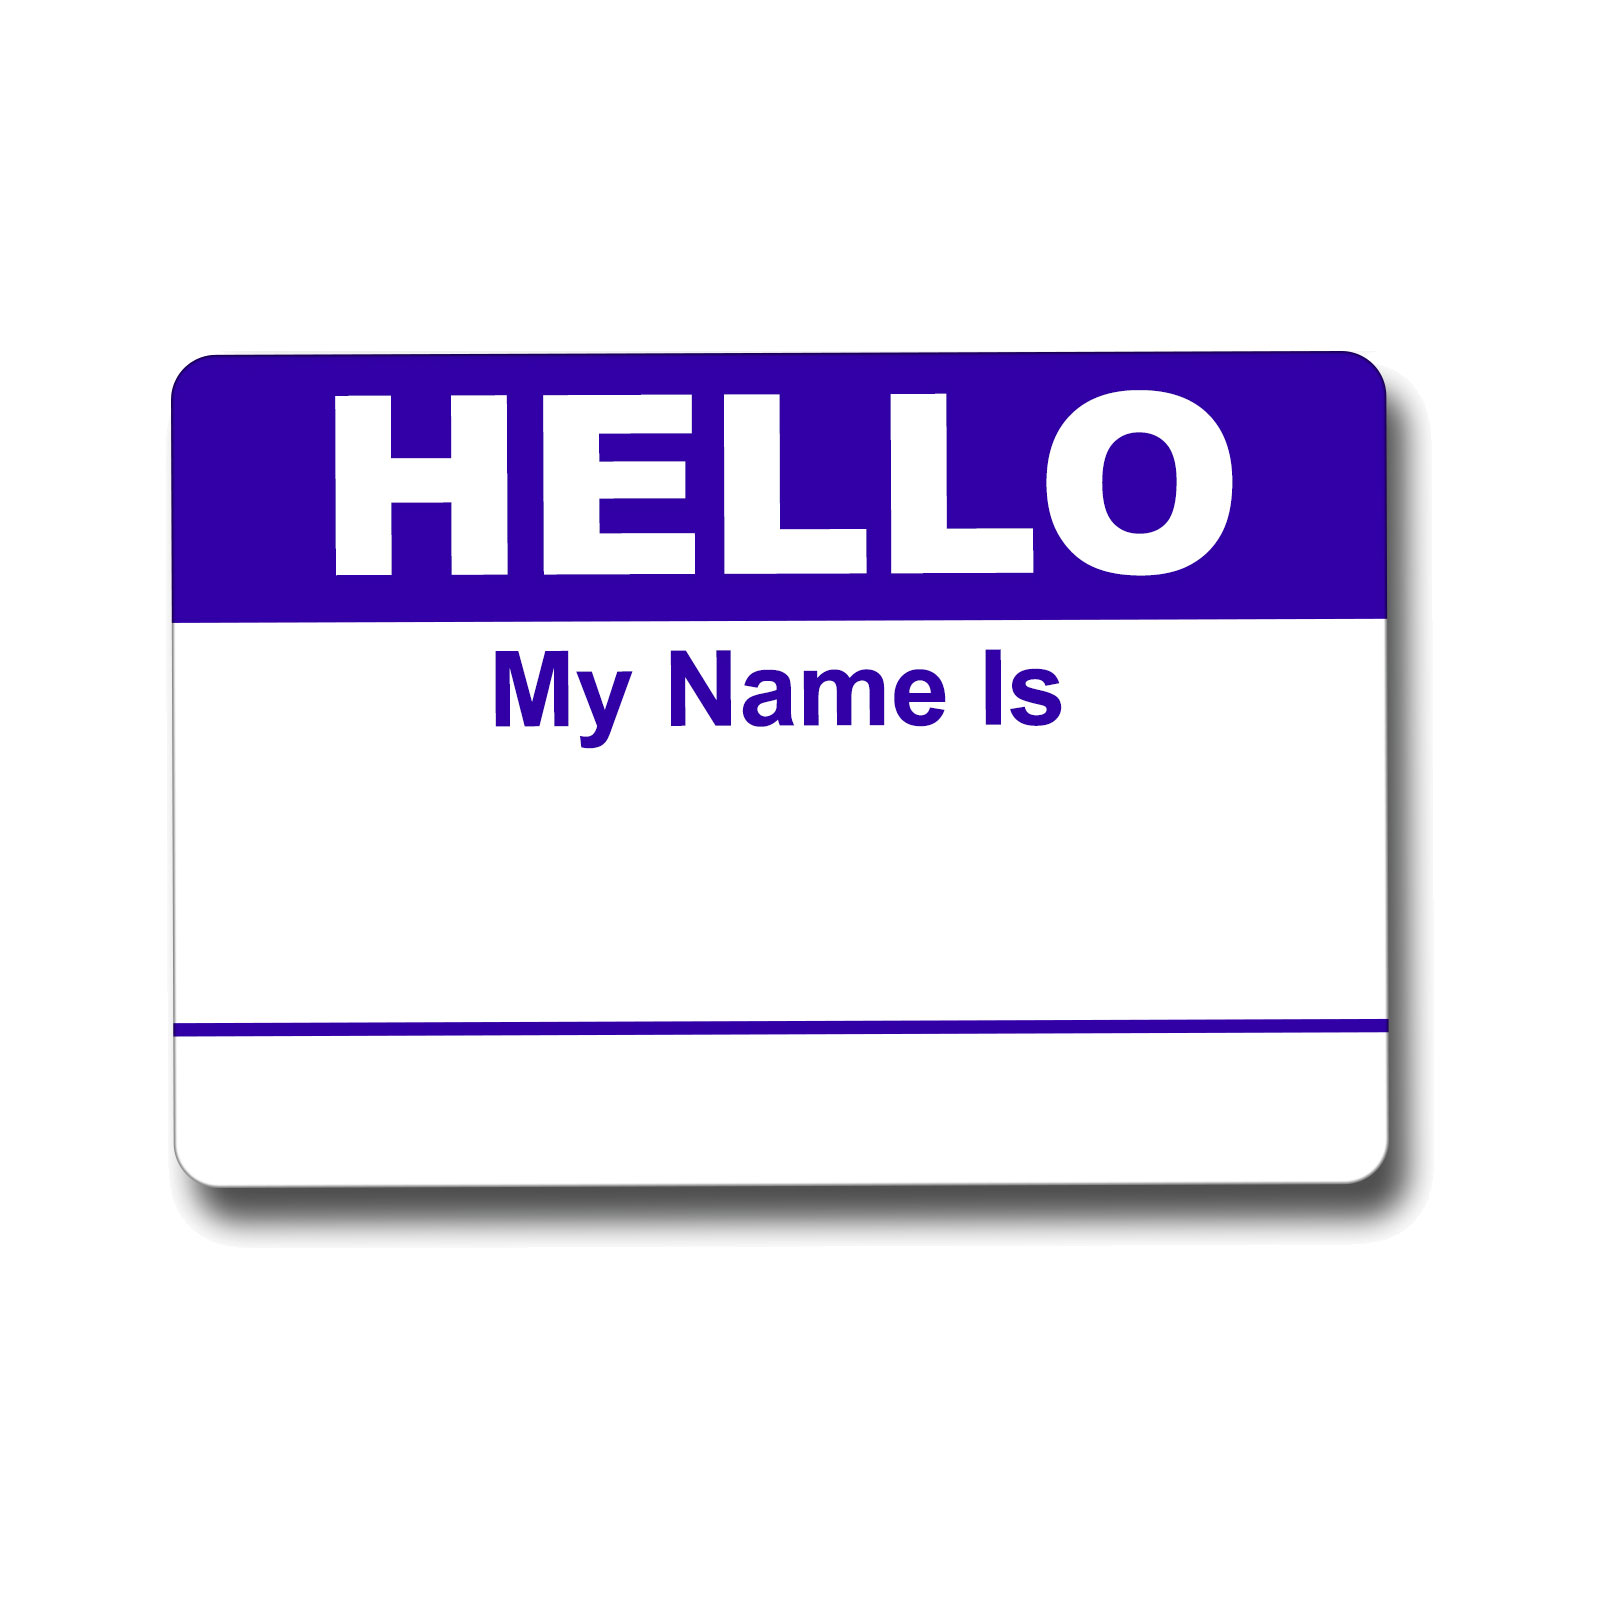 hello my name is image